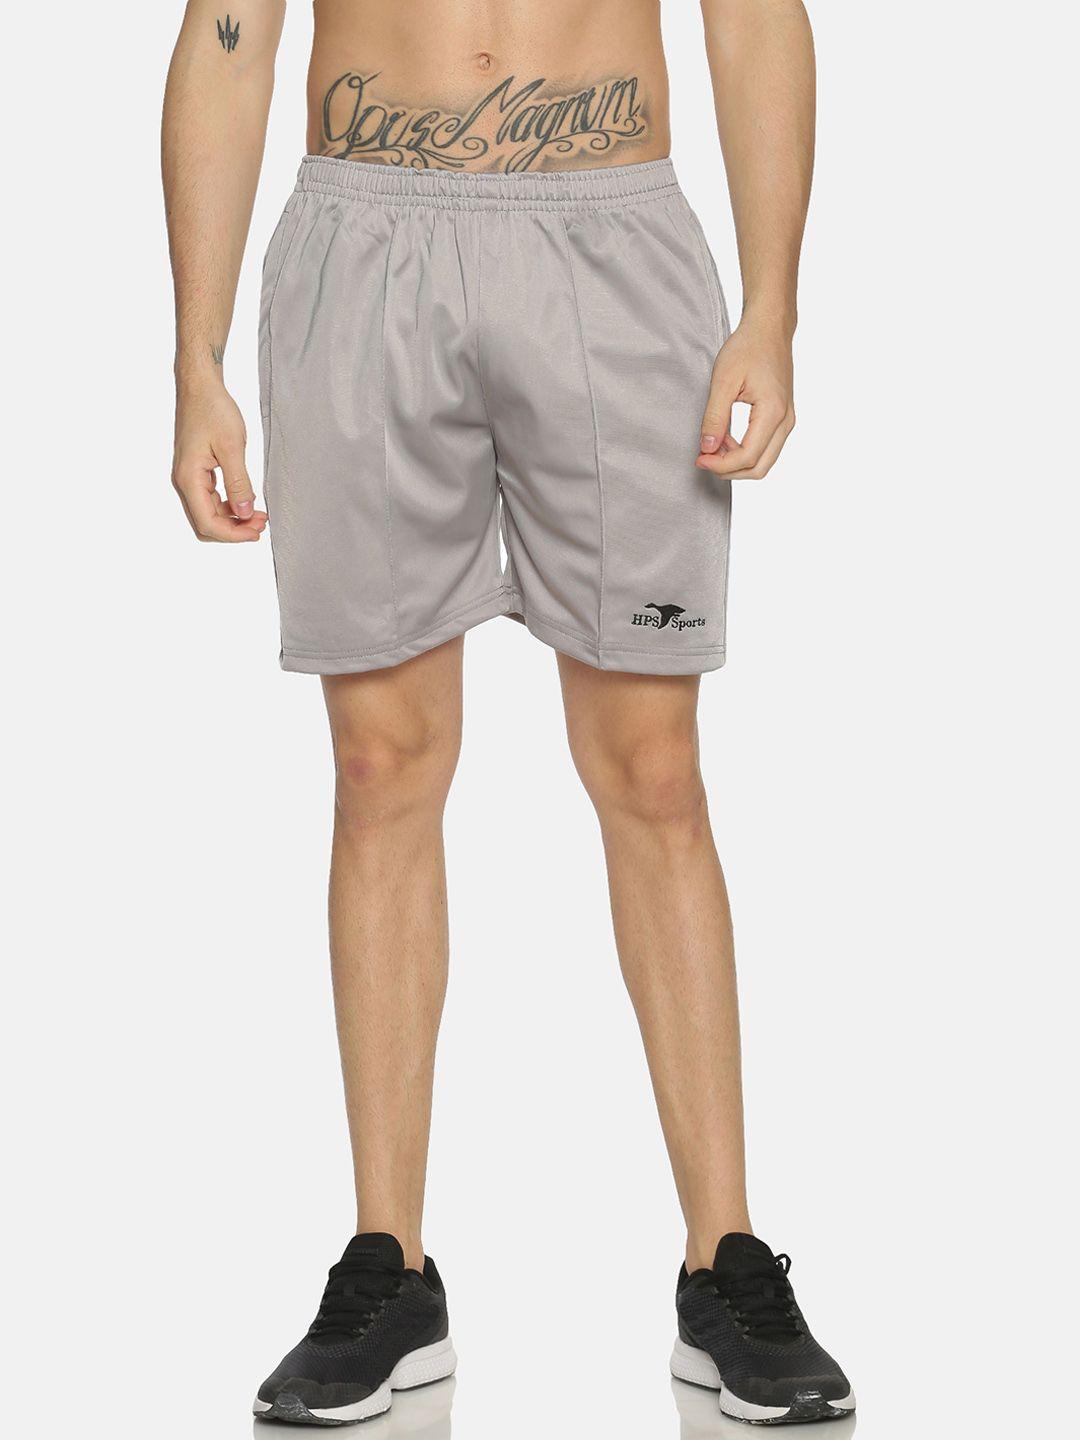 hps sports men grey running sports shorts